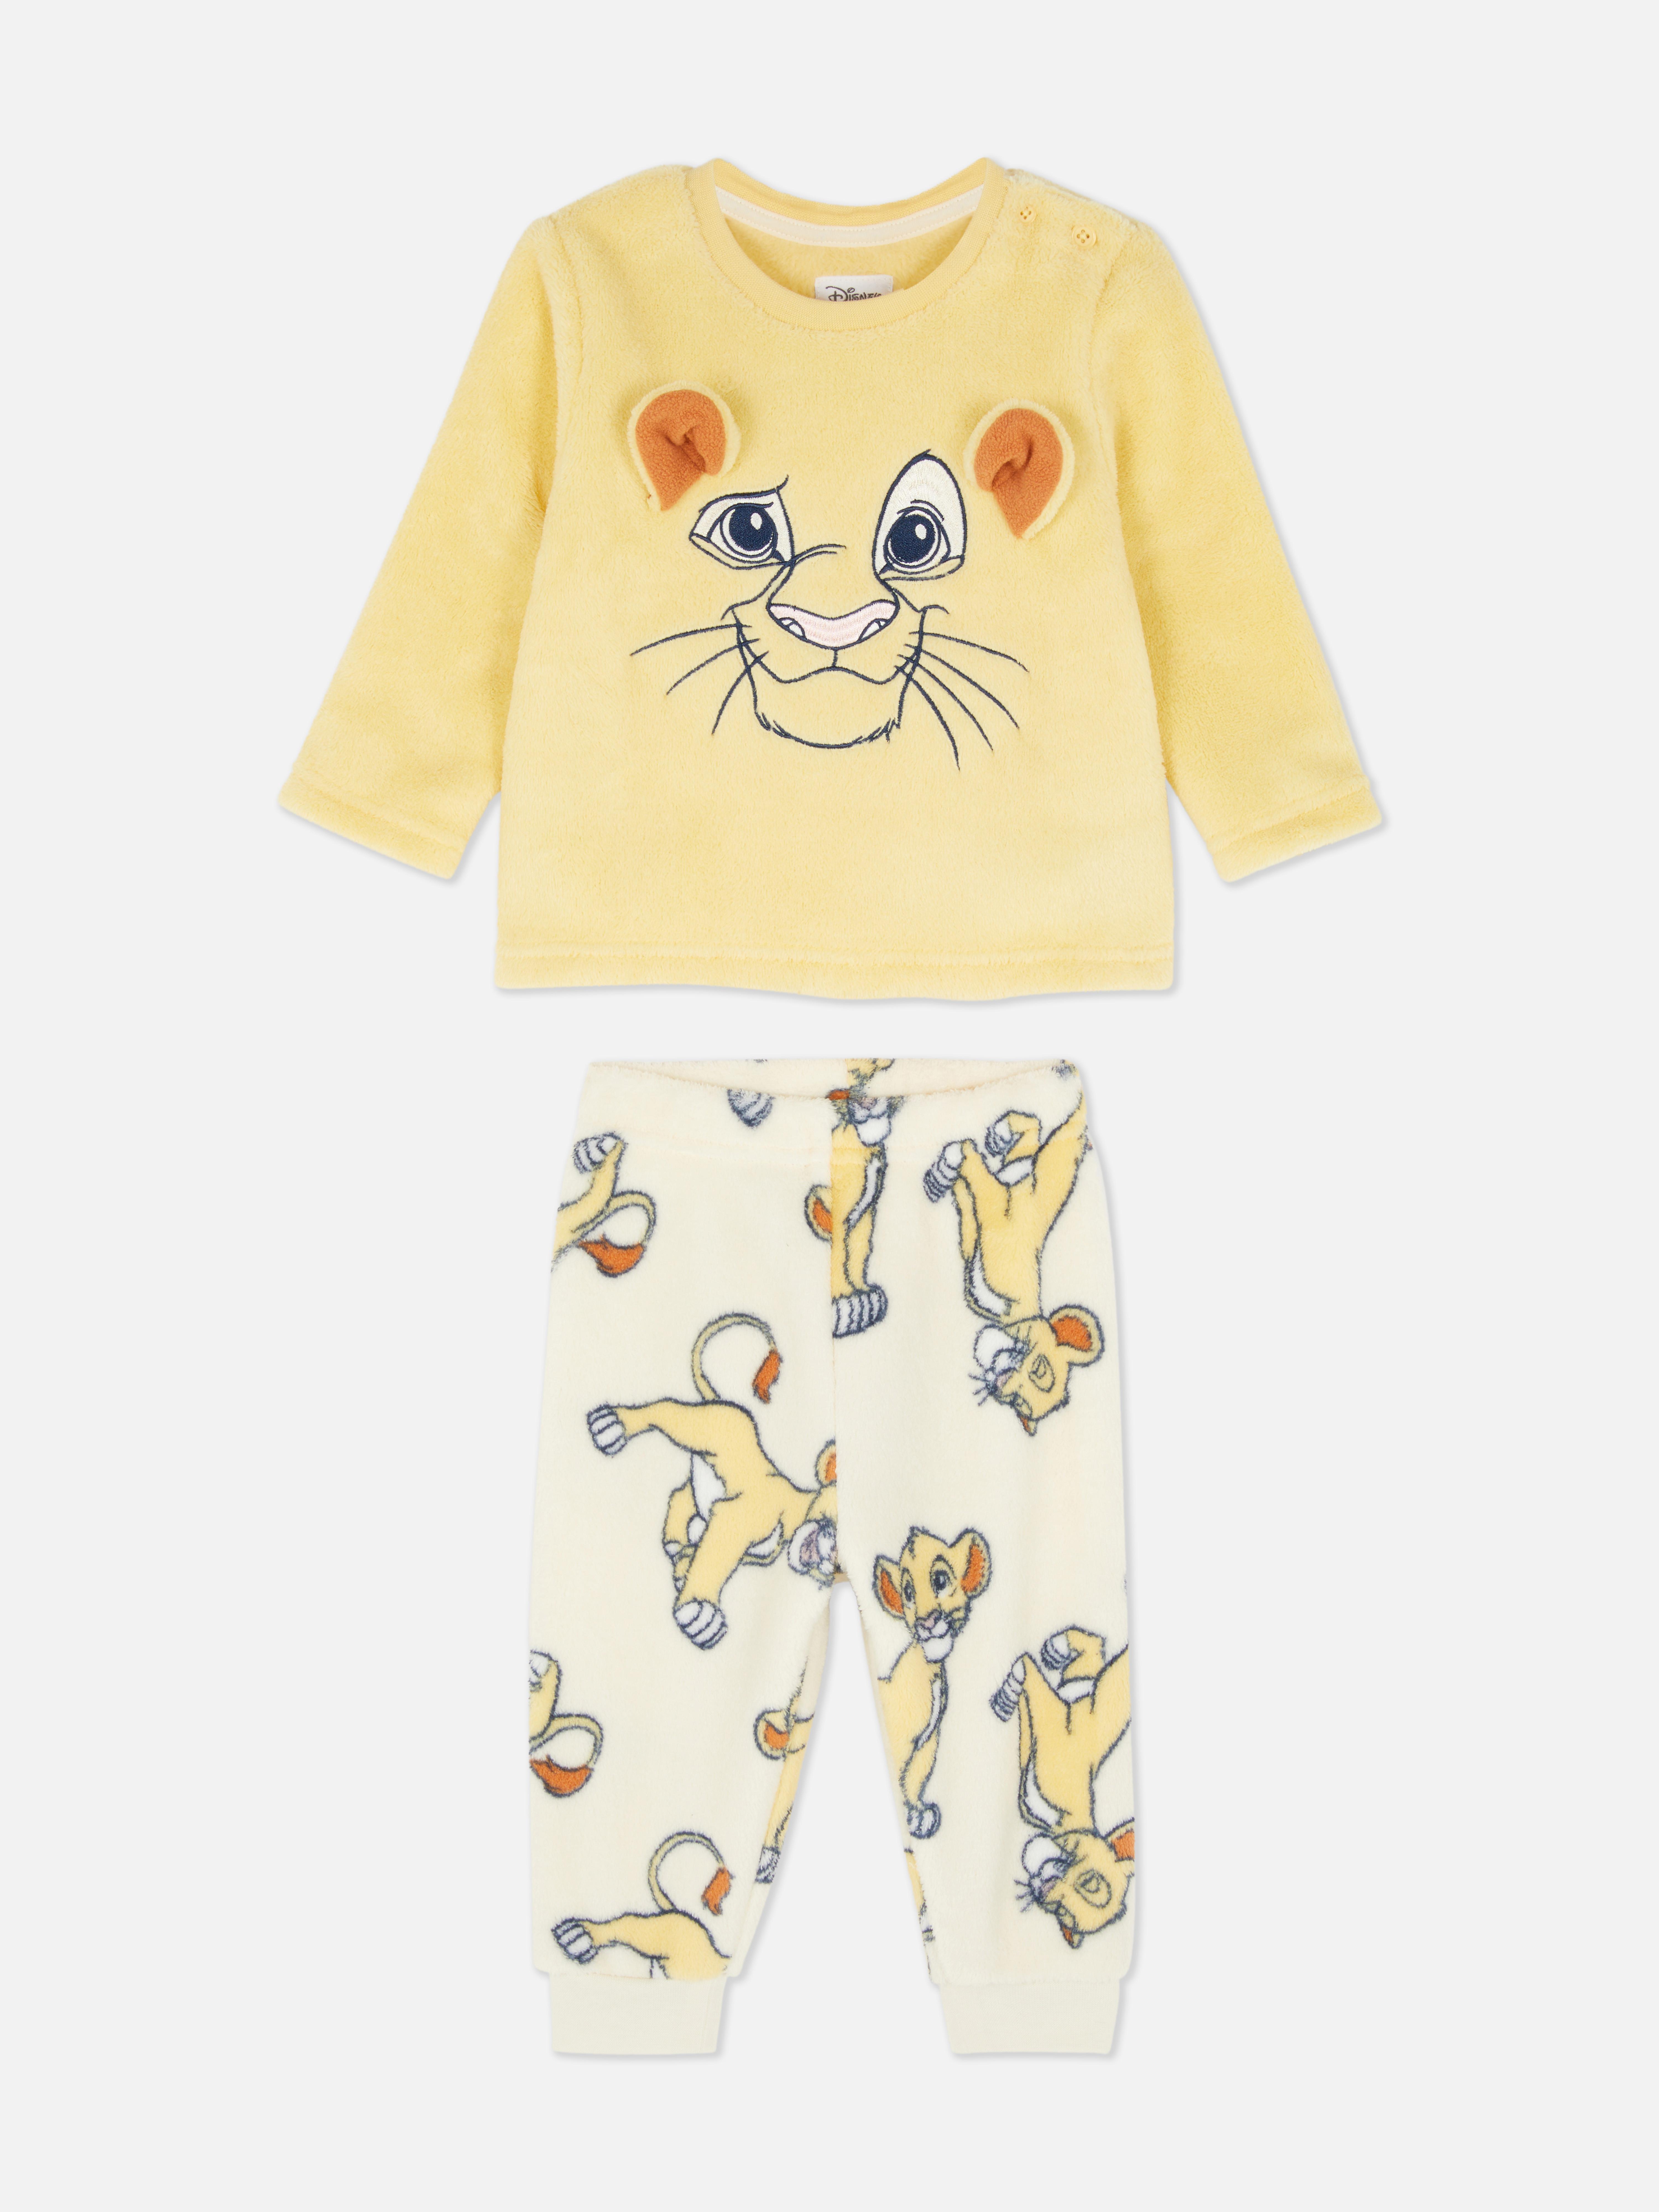 Disney’s The Lion King Fleece Pyjamas